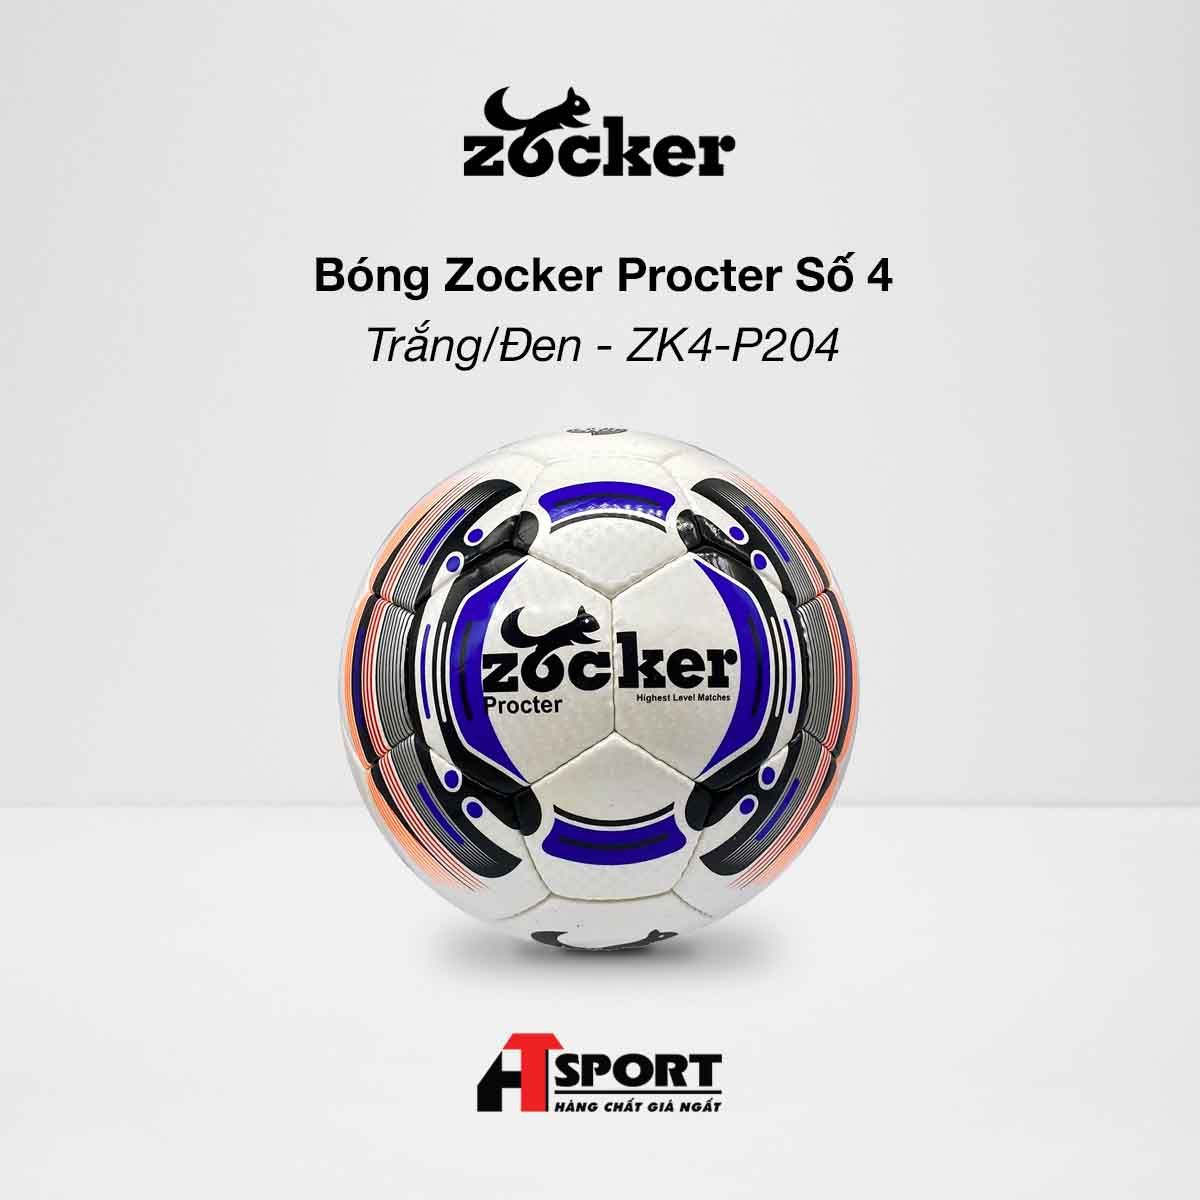  Bóng Zocker Procter Số 4 - Trắng/Đen - ZK4-P204 